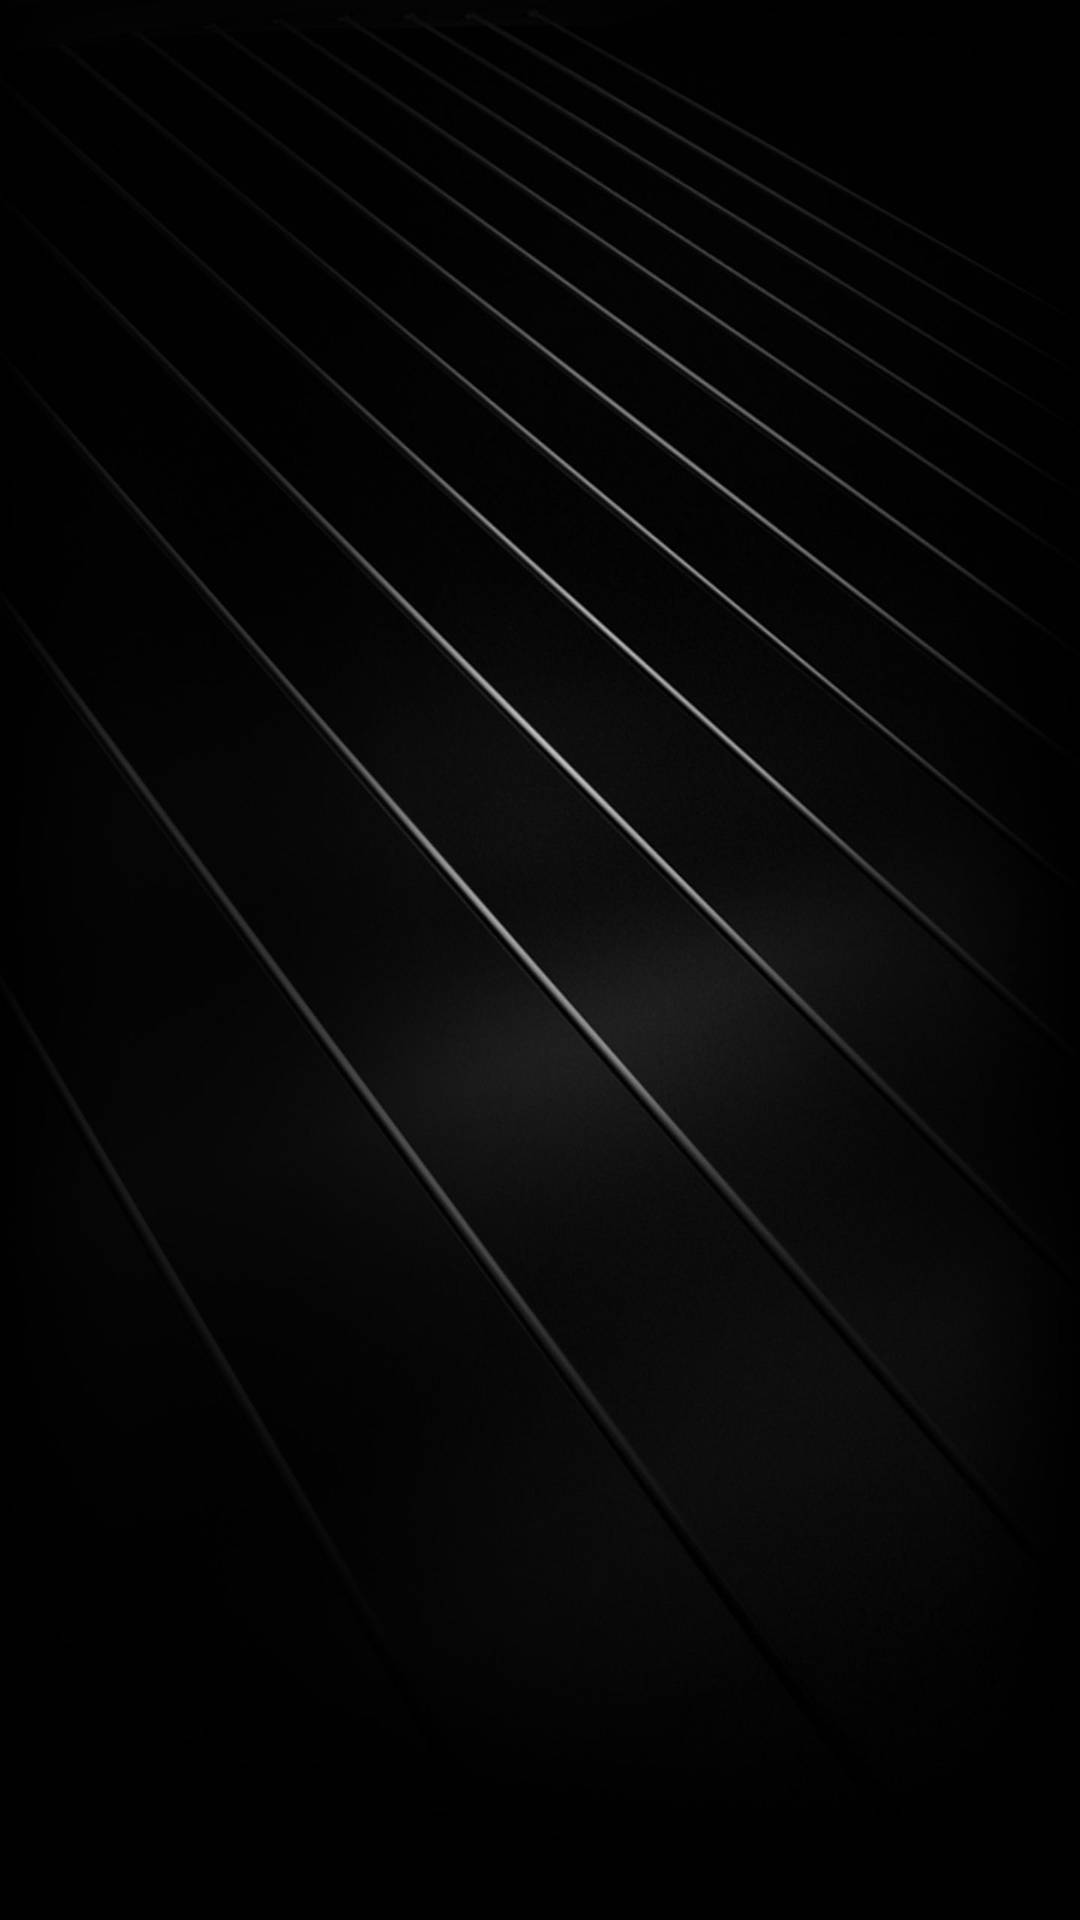 Qhd Striped Black Background